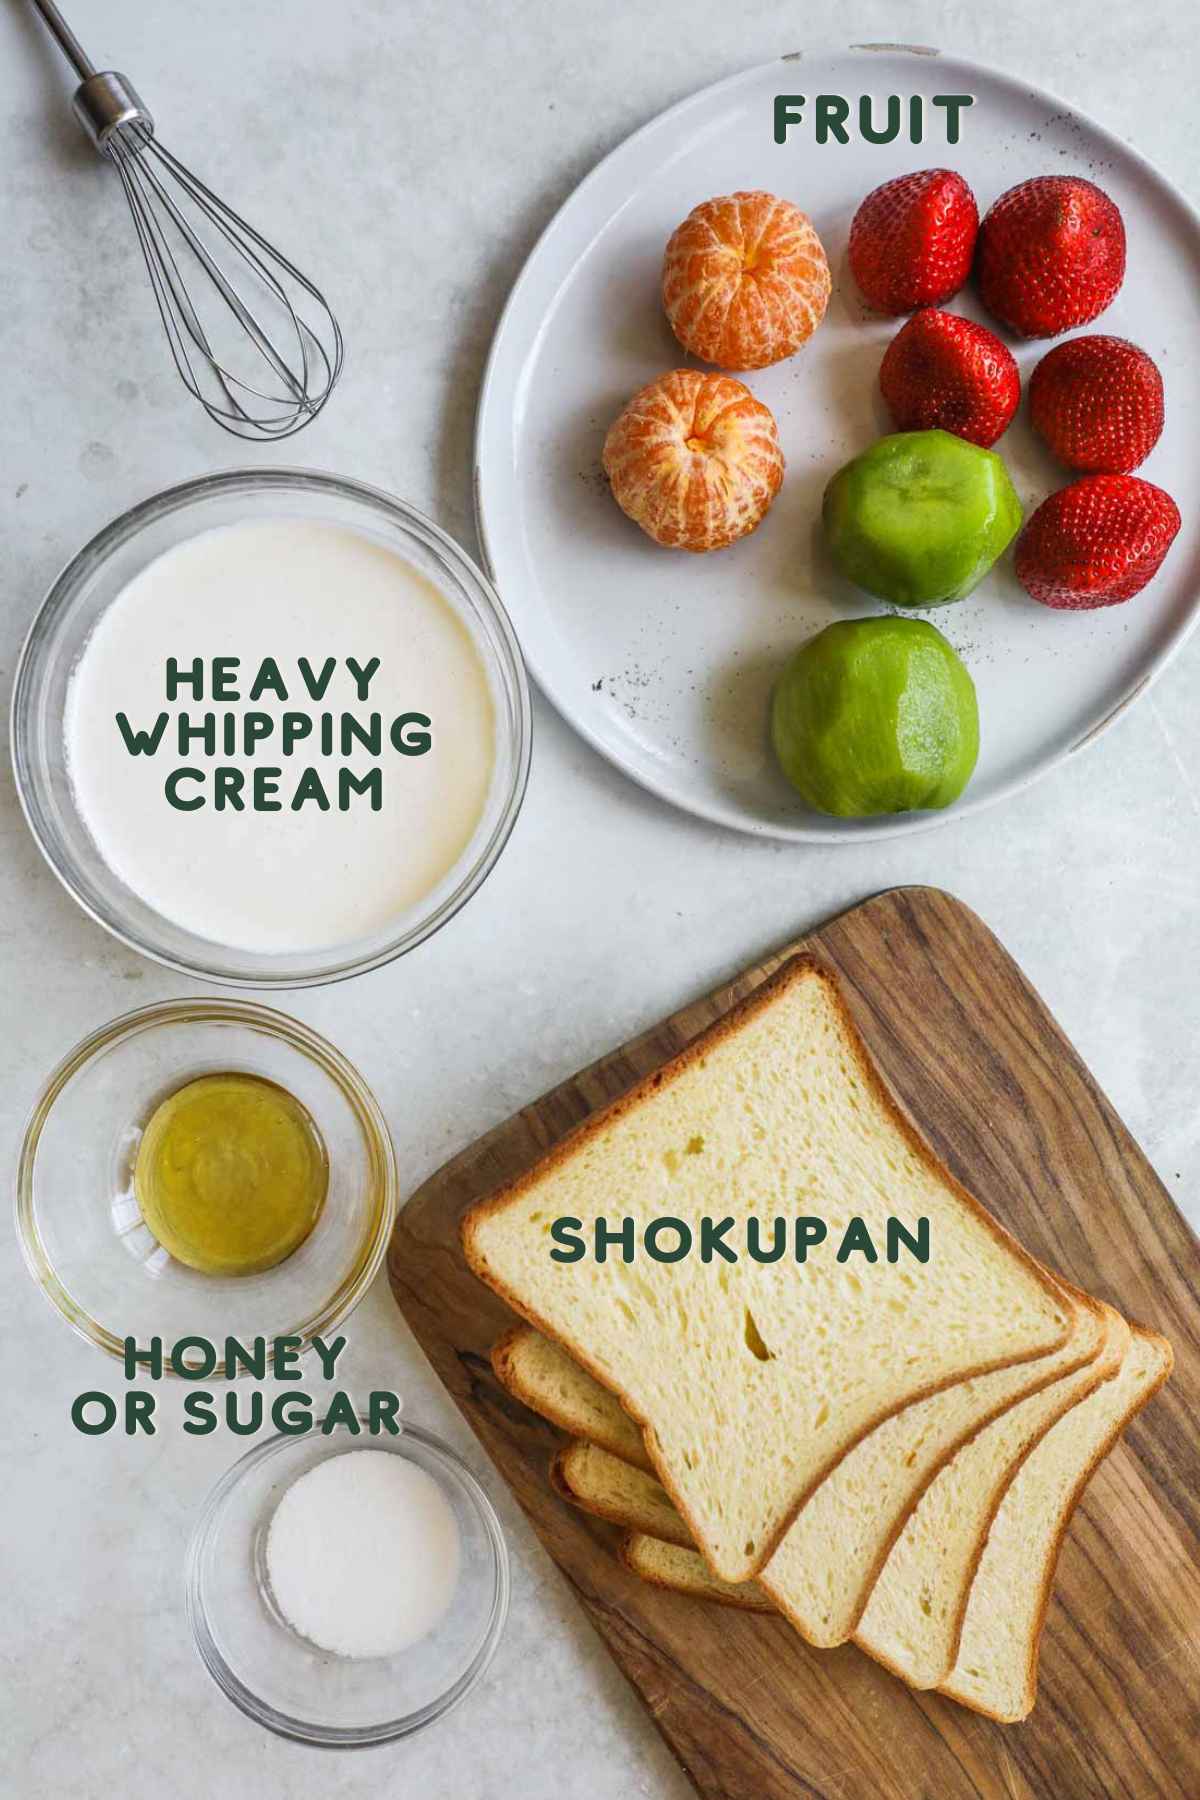 Ingredients to make Japanese fruit sandosandwich, including shokupan, honey or sugar, heavy whipping cream, and fresh fruit.